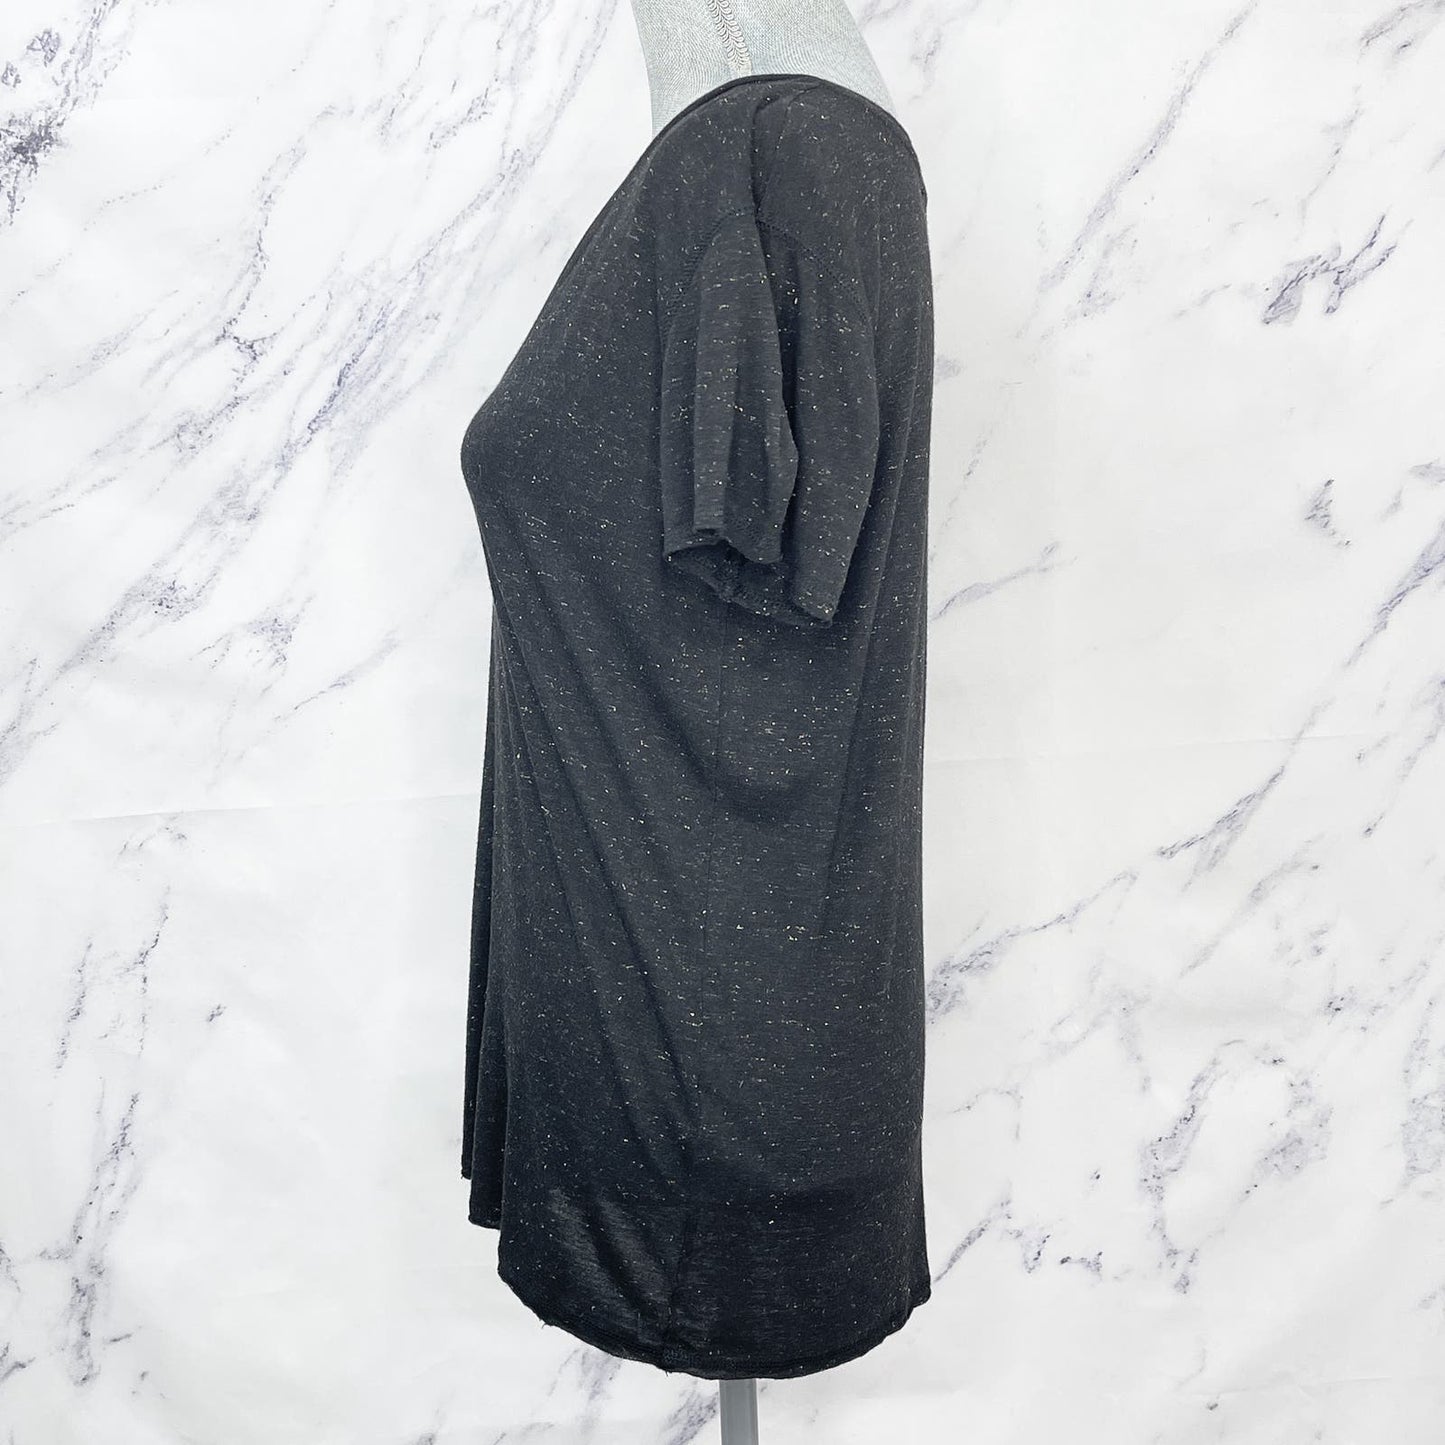 All Saints | Emelyn Shimmer Woven T-Shirt | M